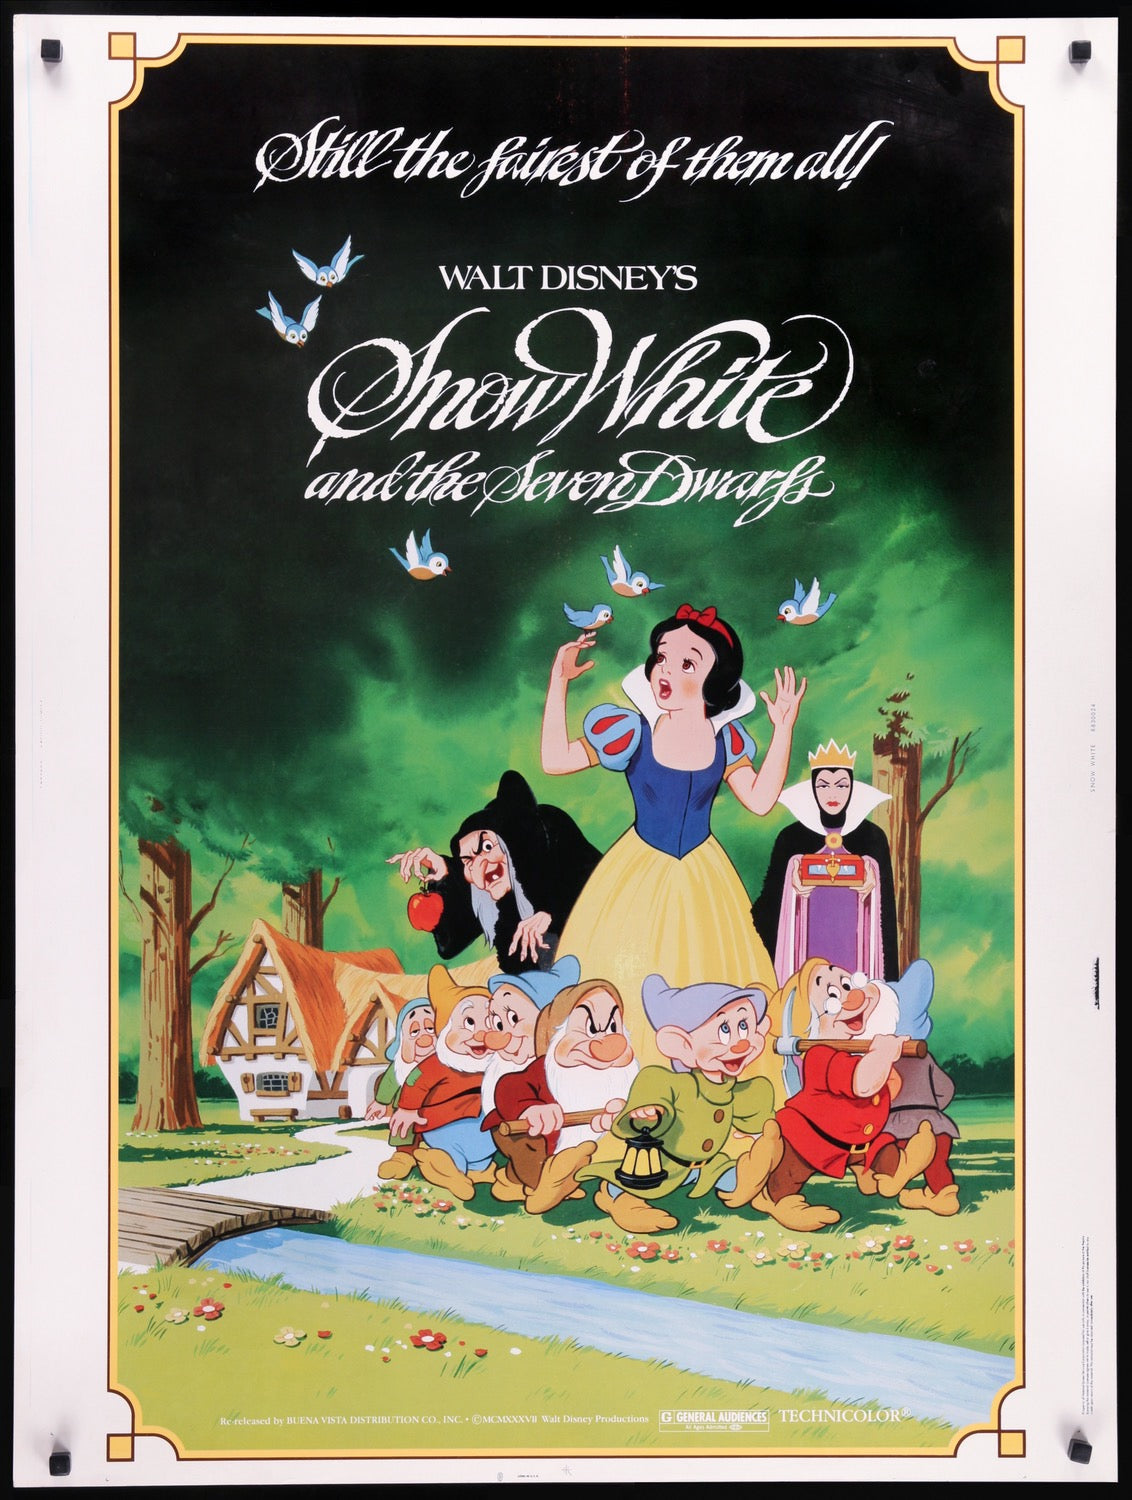 Snow White and the Seven Dwarfs (1937) original movie poster for sale at Original Film Art